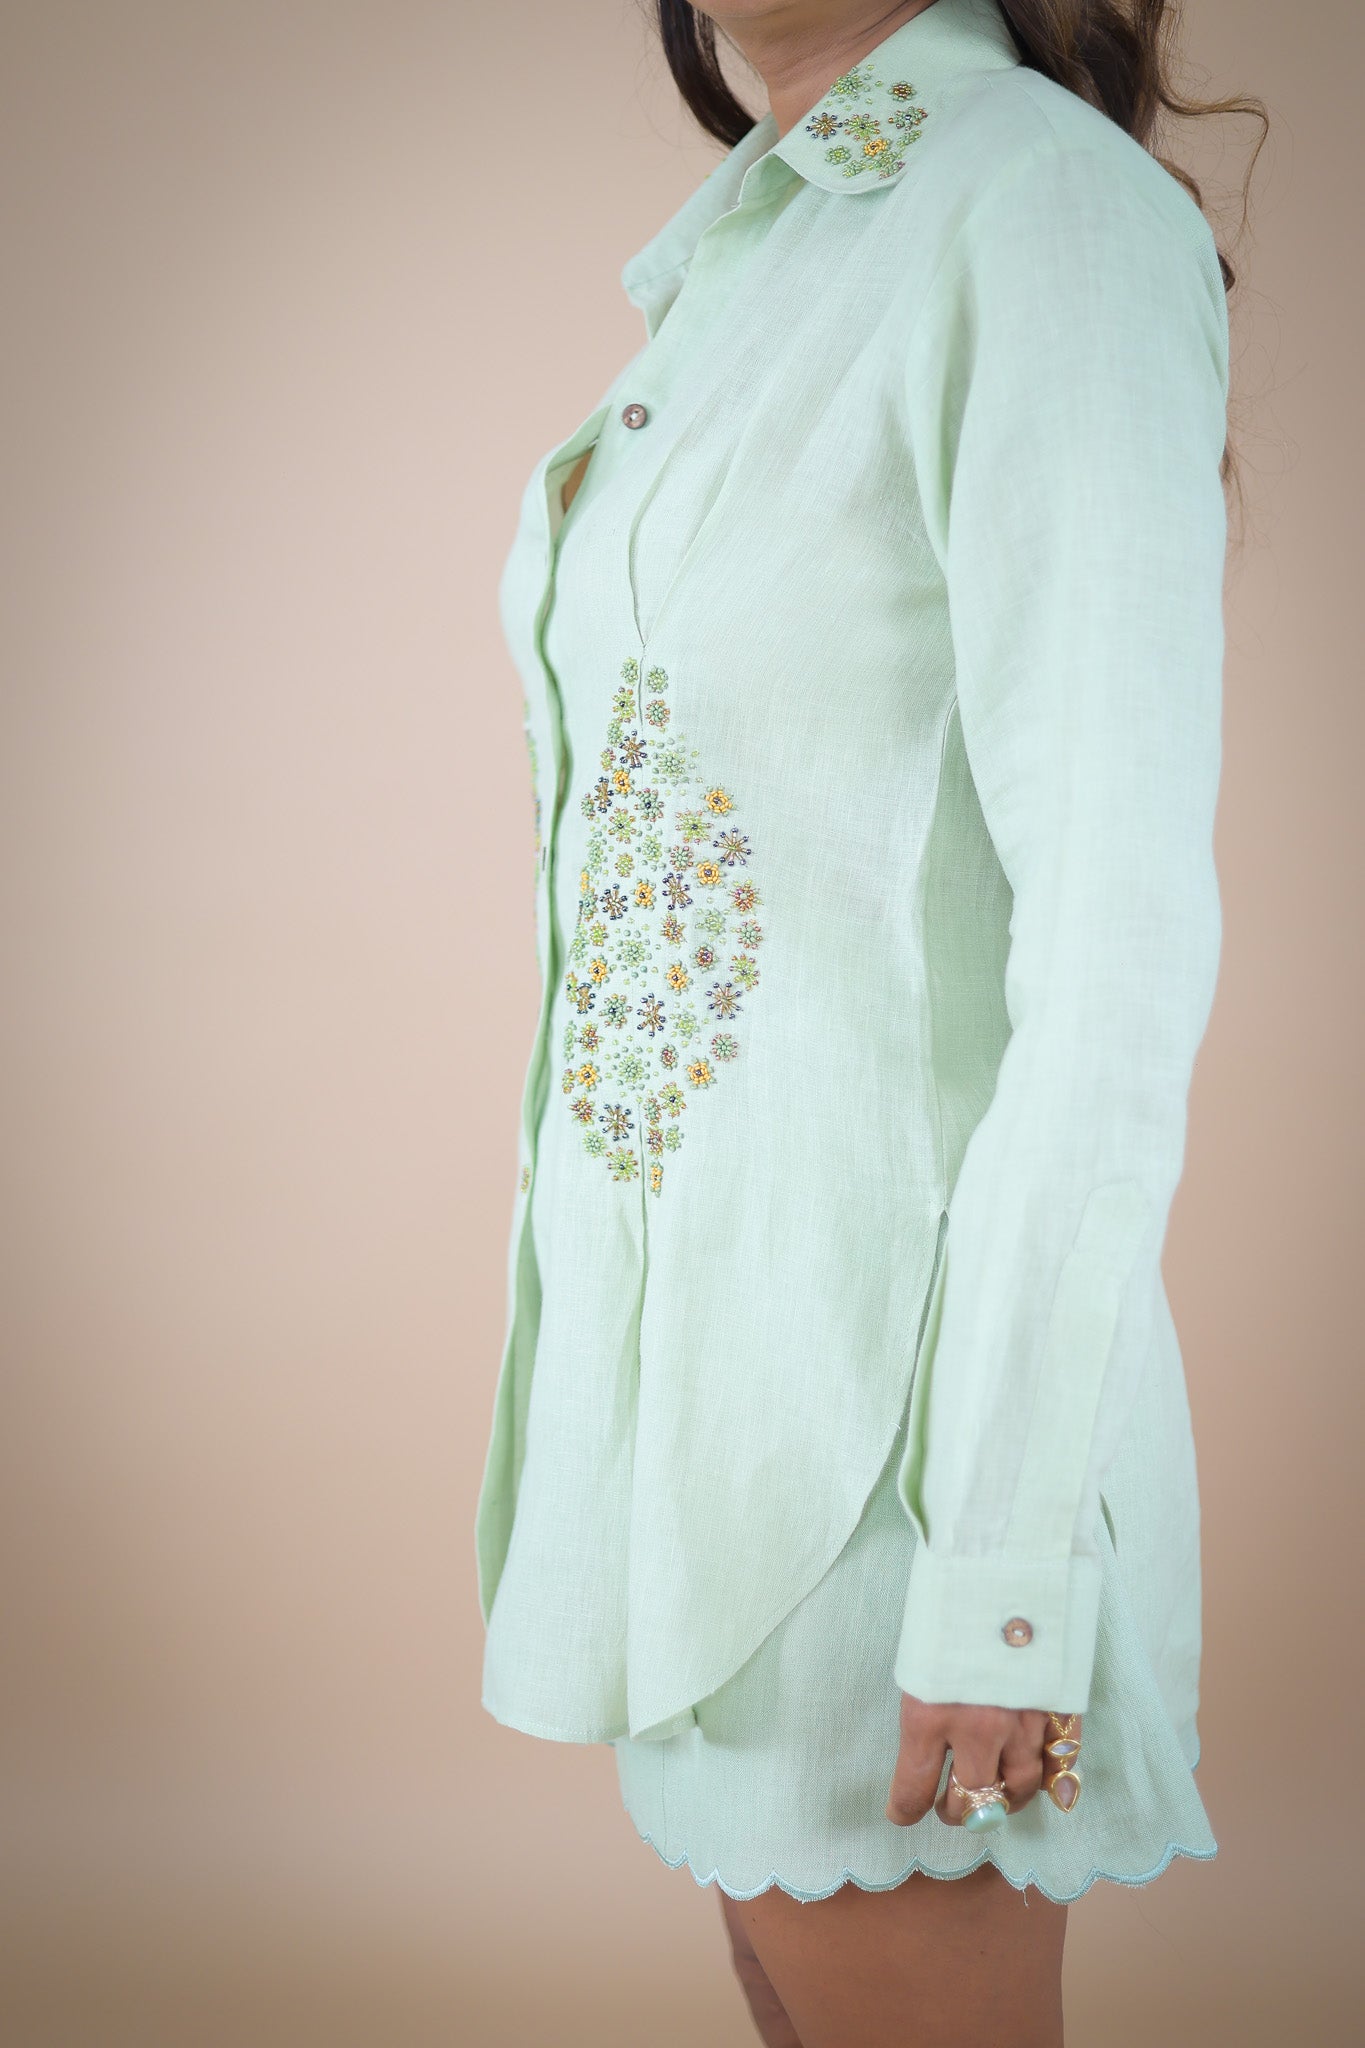 Matcha embroidered shirt and shorts coord set